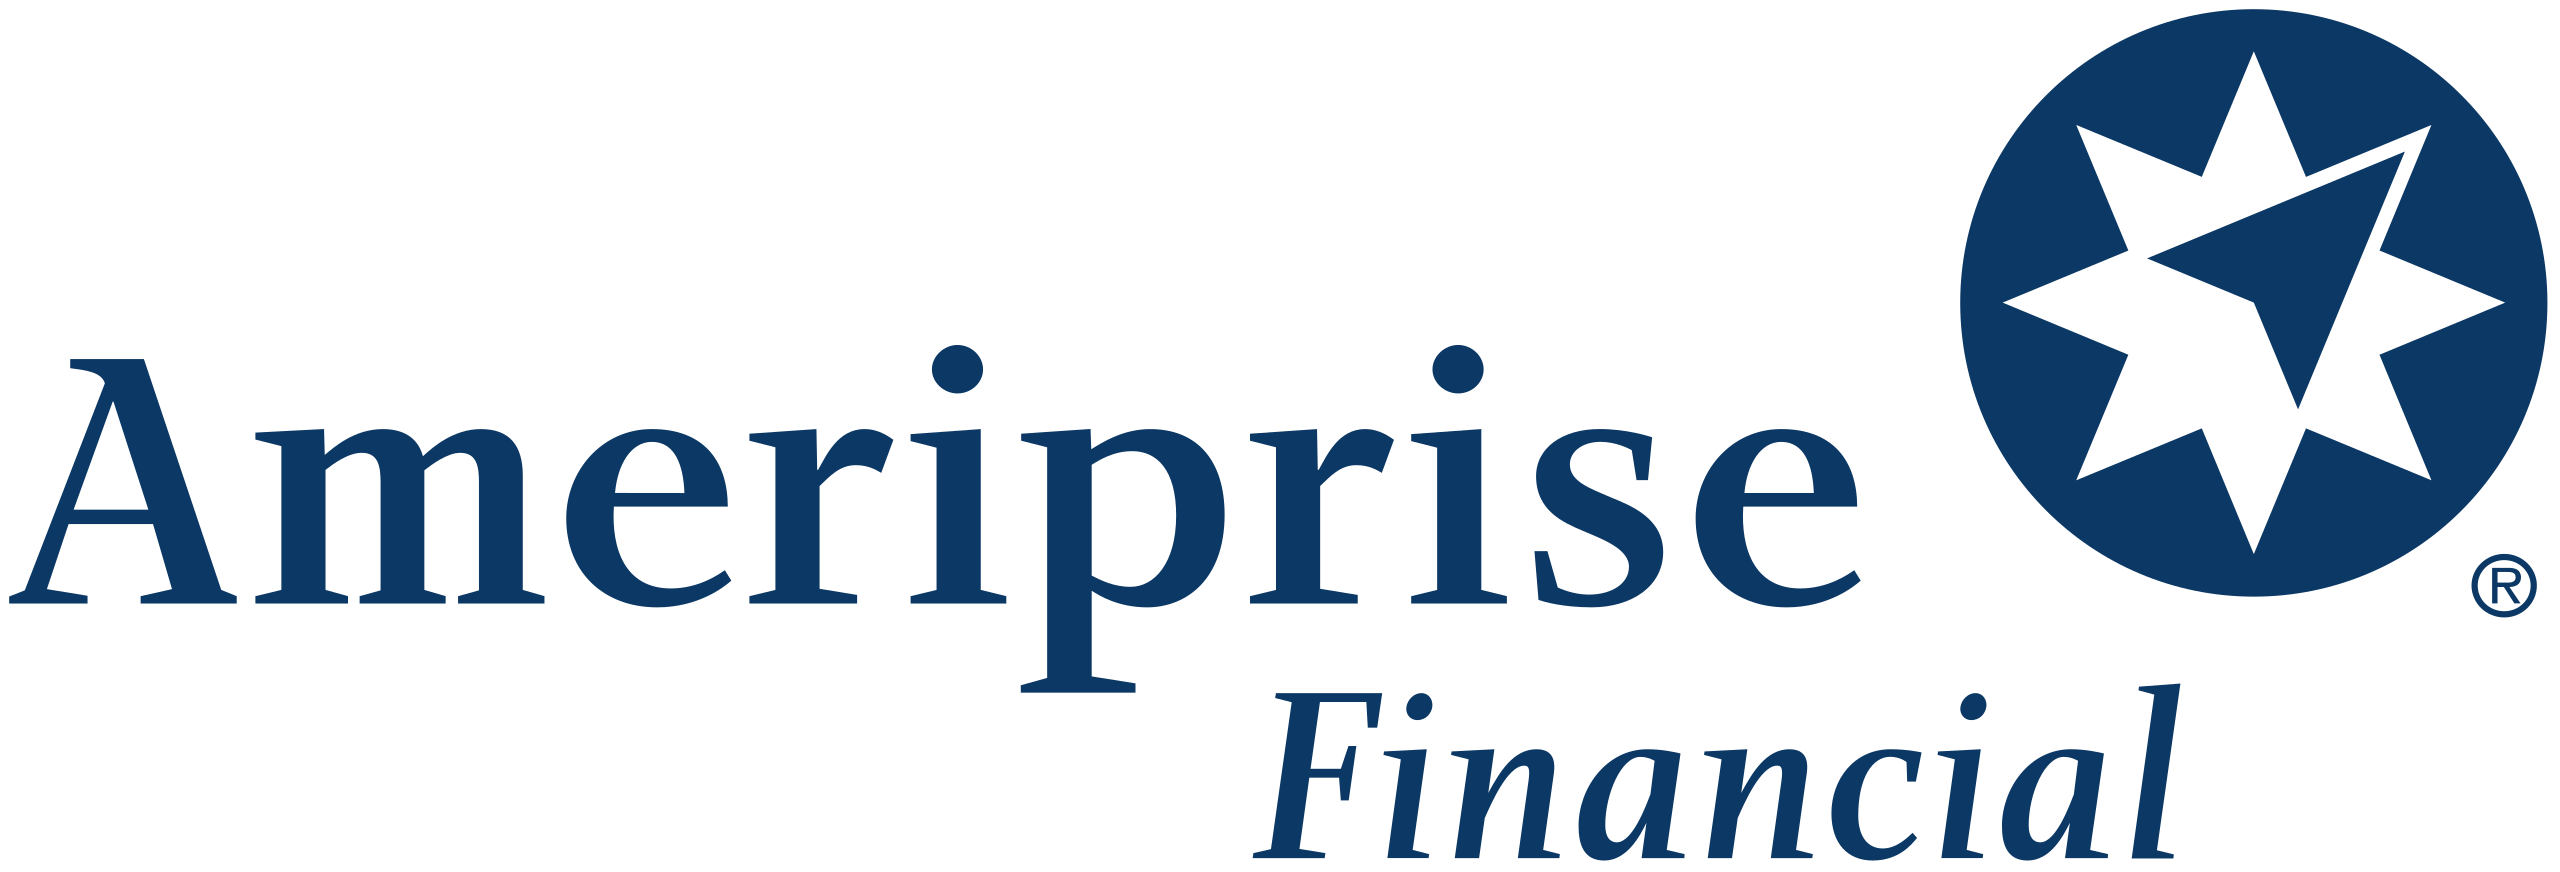 2560px-Ameriprise Financial logo.svg